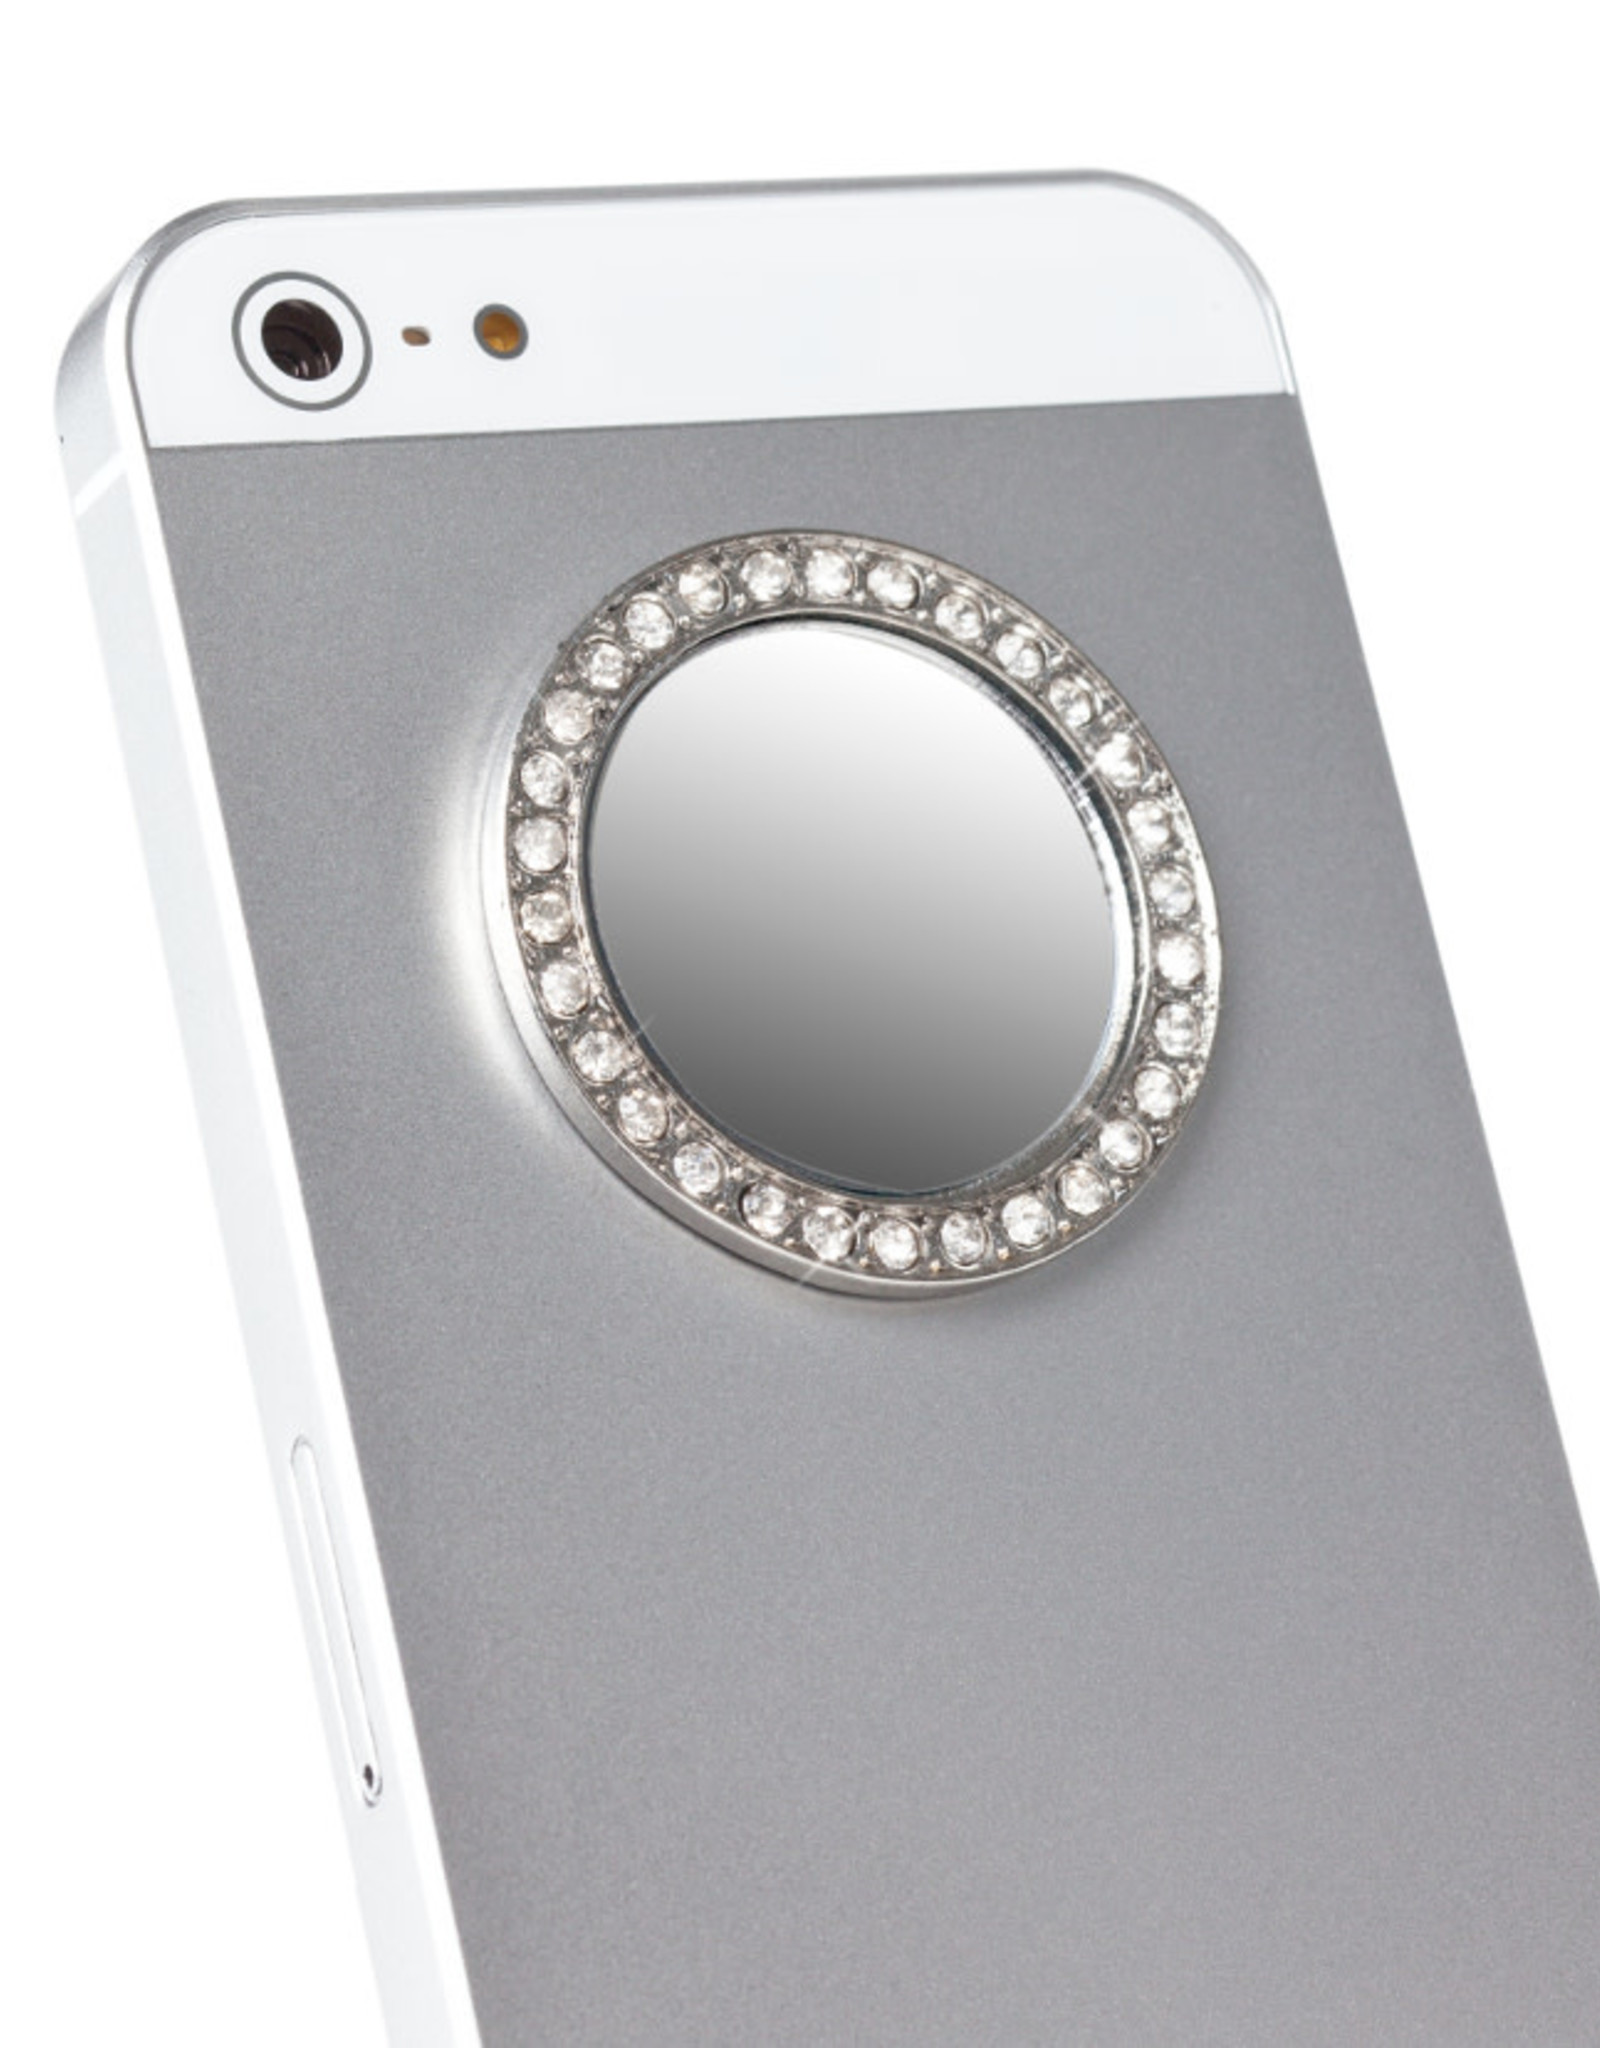 iDecoz Oval Tech Mirror - Silver/Clear Crystals